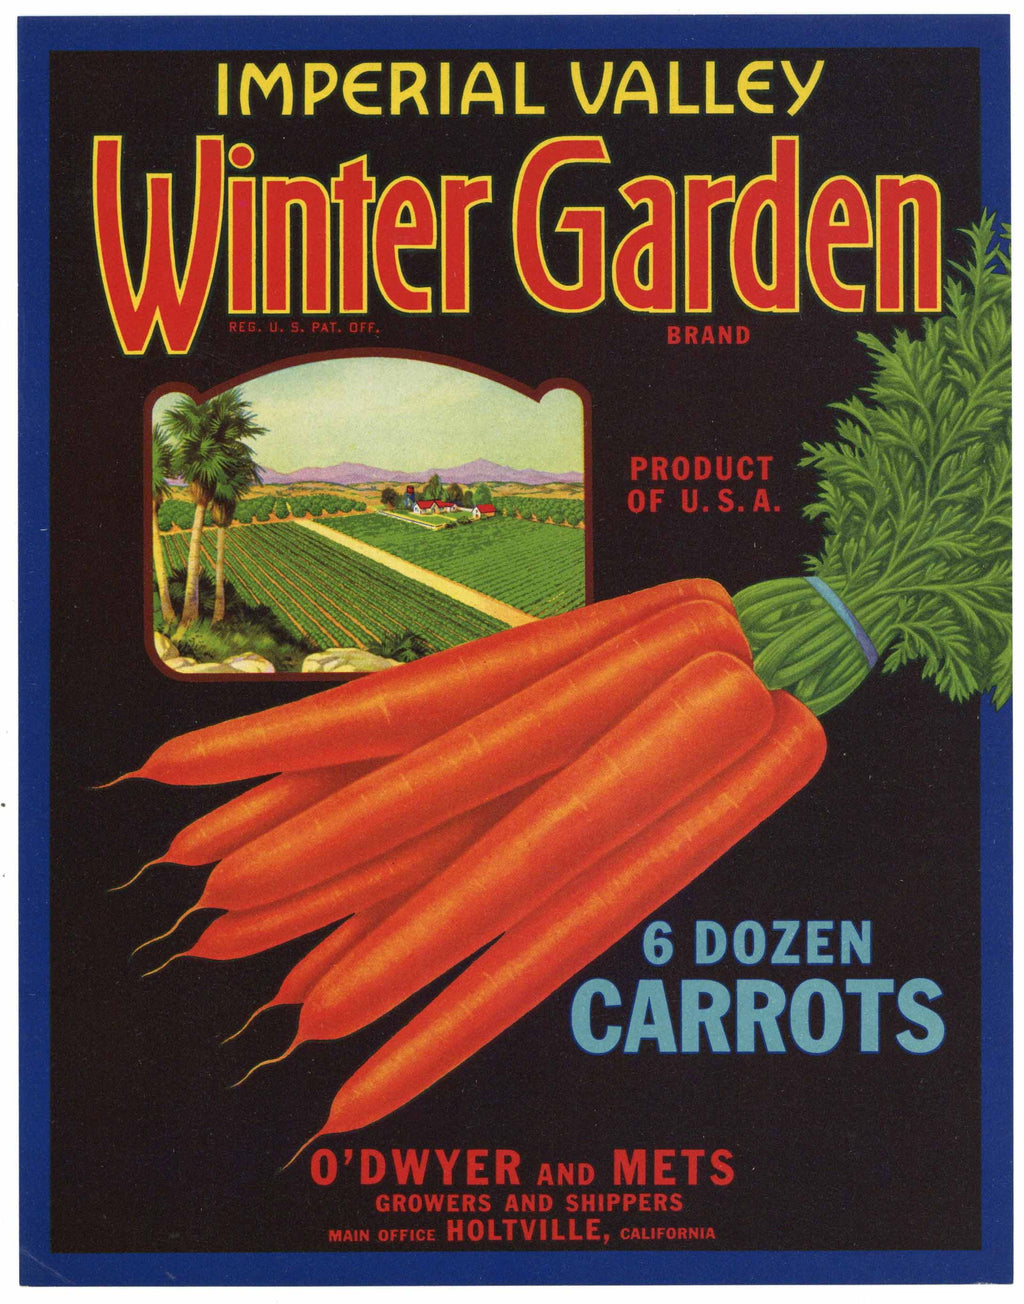 Winter Garden Brand Vintage Imperial Valley Vegetable Crate Label, Carrots, 6 dozen